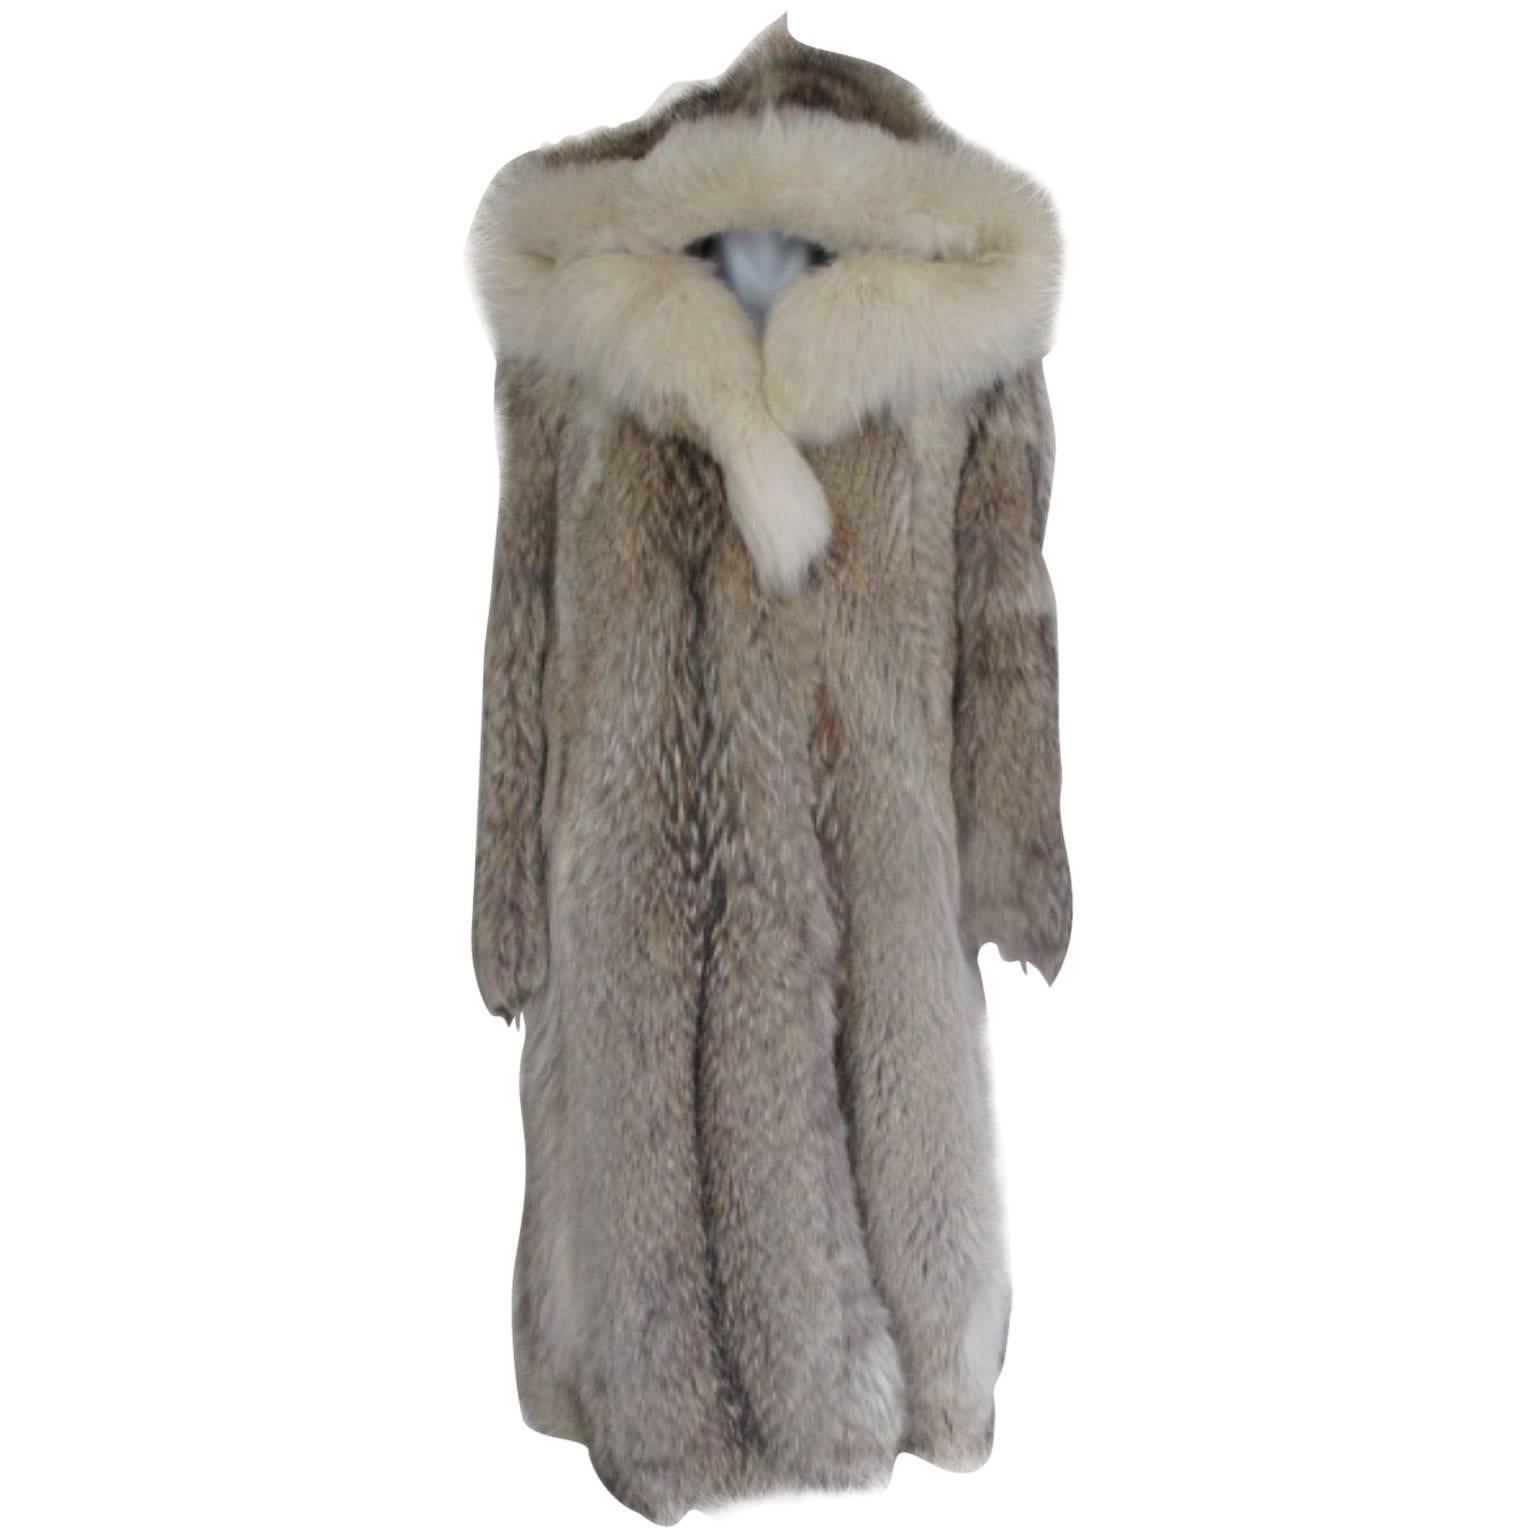 rare wolf/coyote fur coat with huge hood